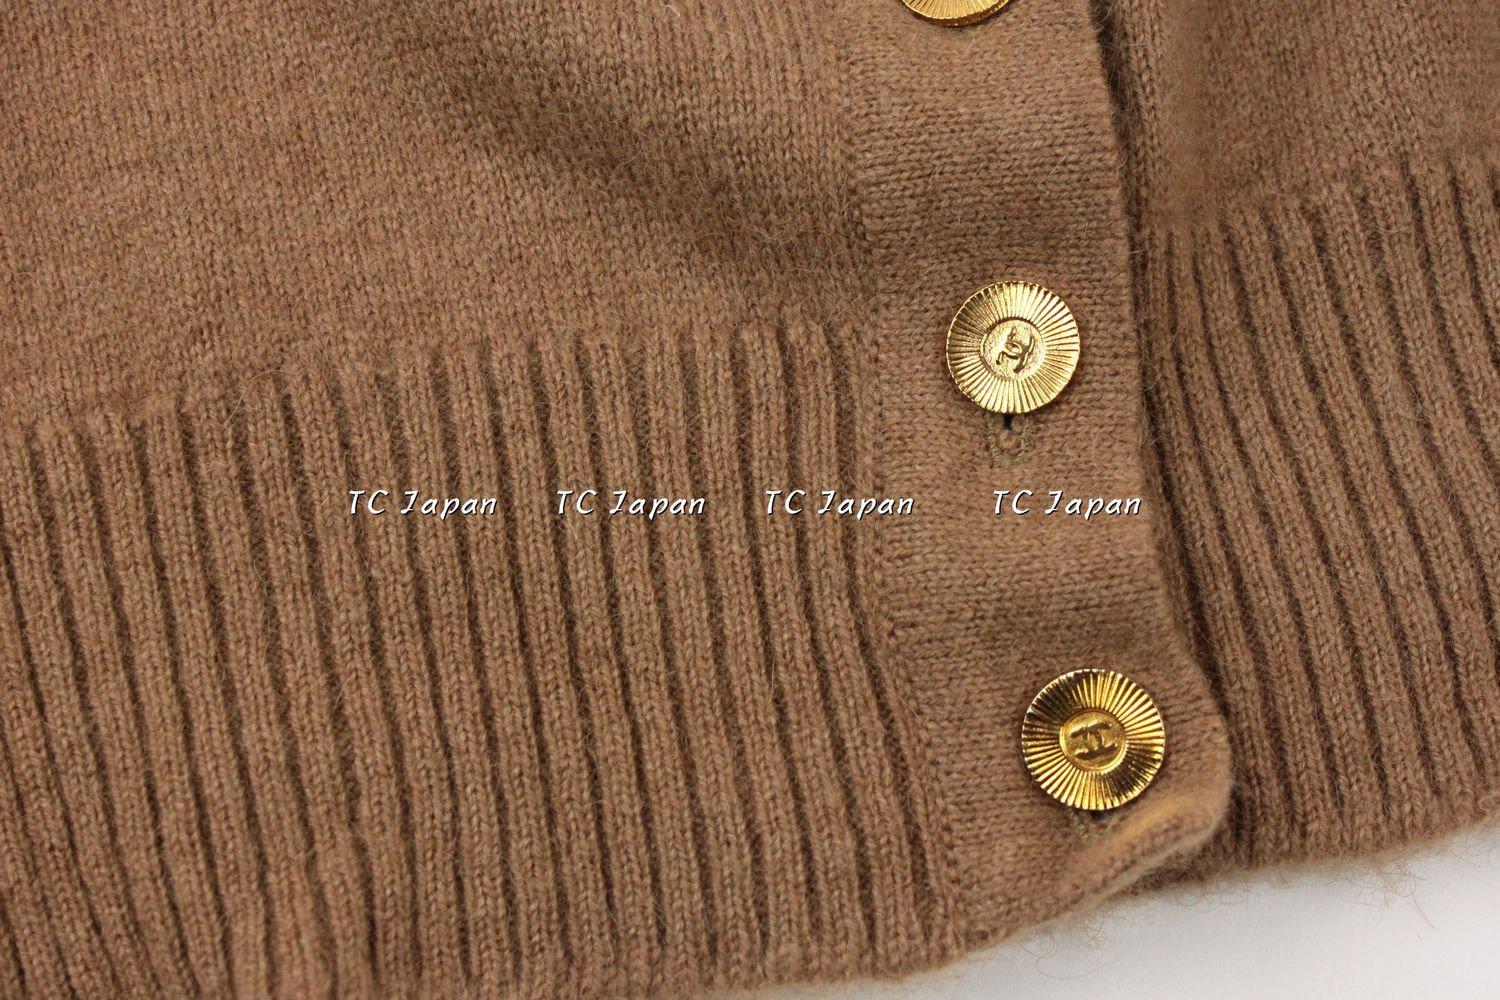 CHANEL Brown Camel Hair Cardigan 38 40 シャネル キャメルヘアー・カーディガン 新品タグ付き 即発 - シャネル TC JAPAN